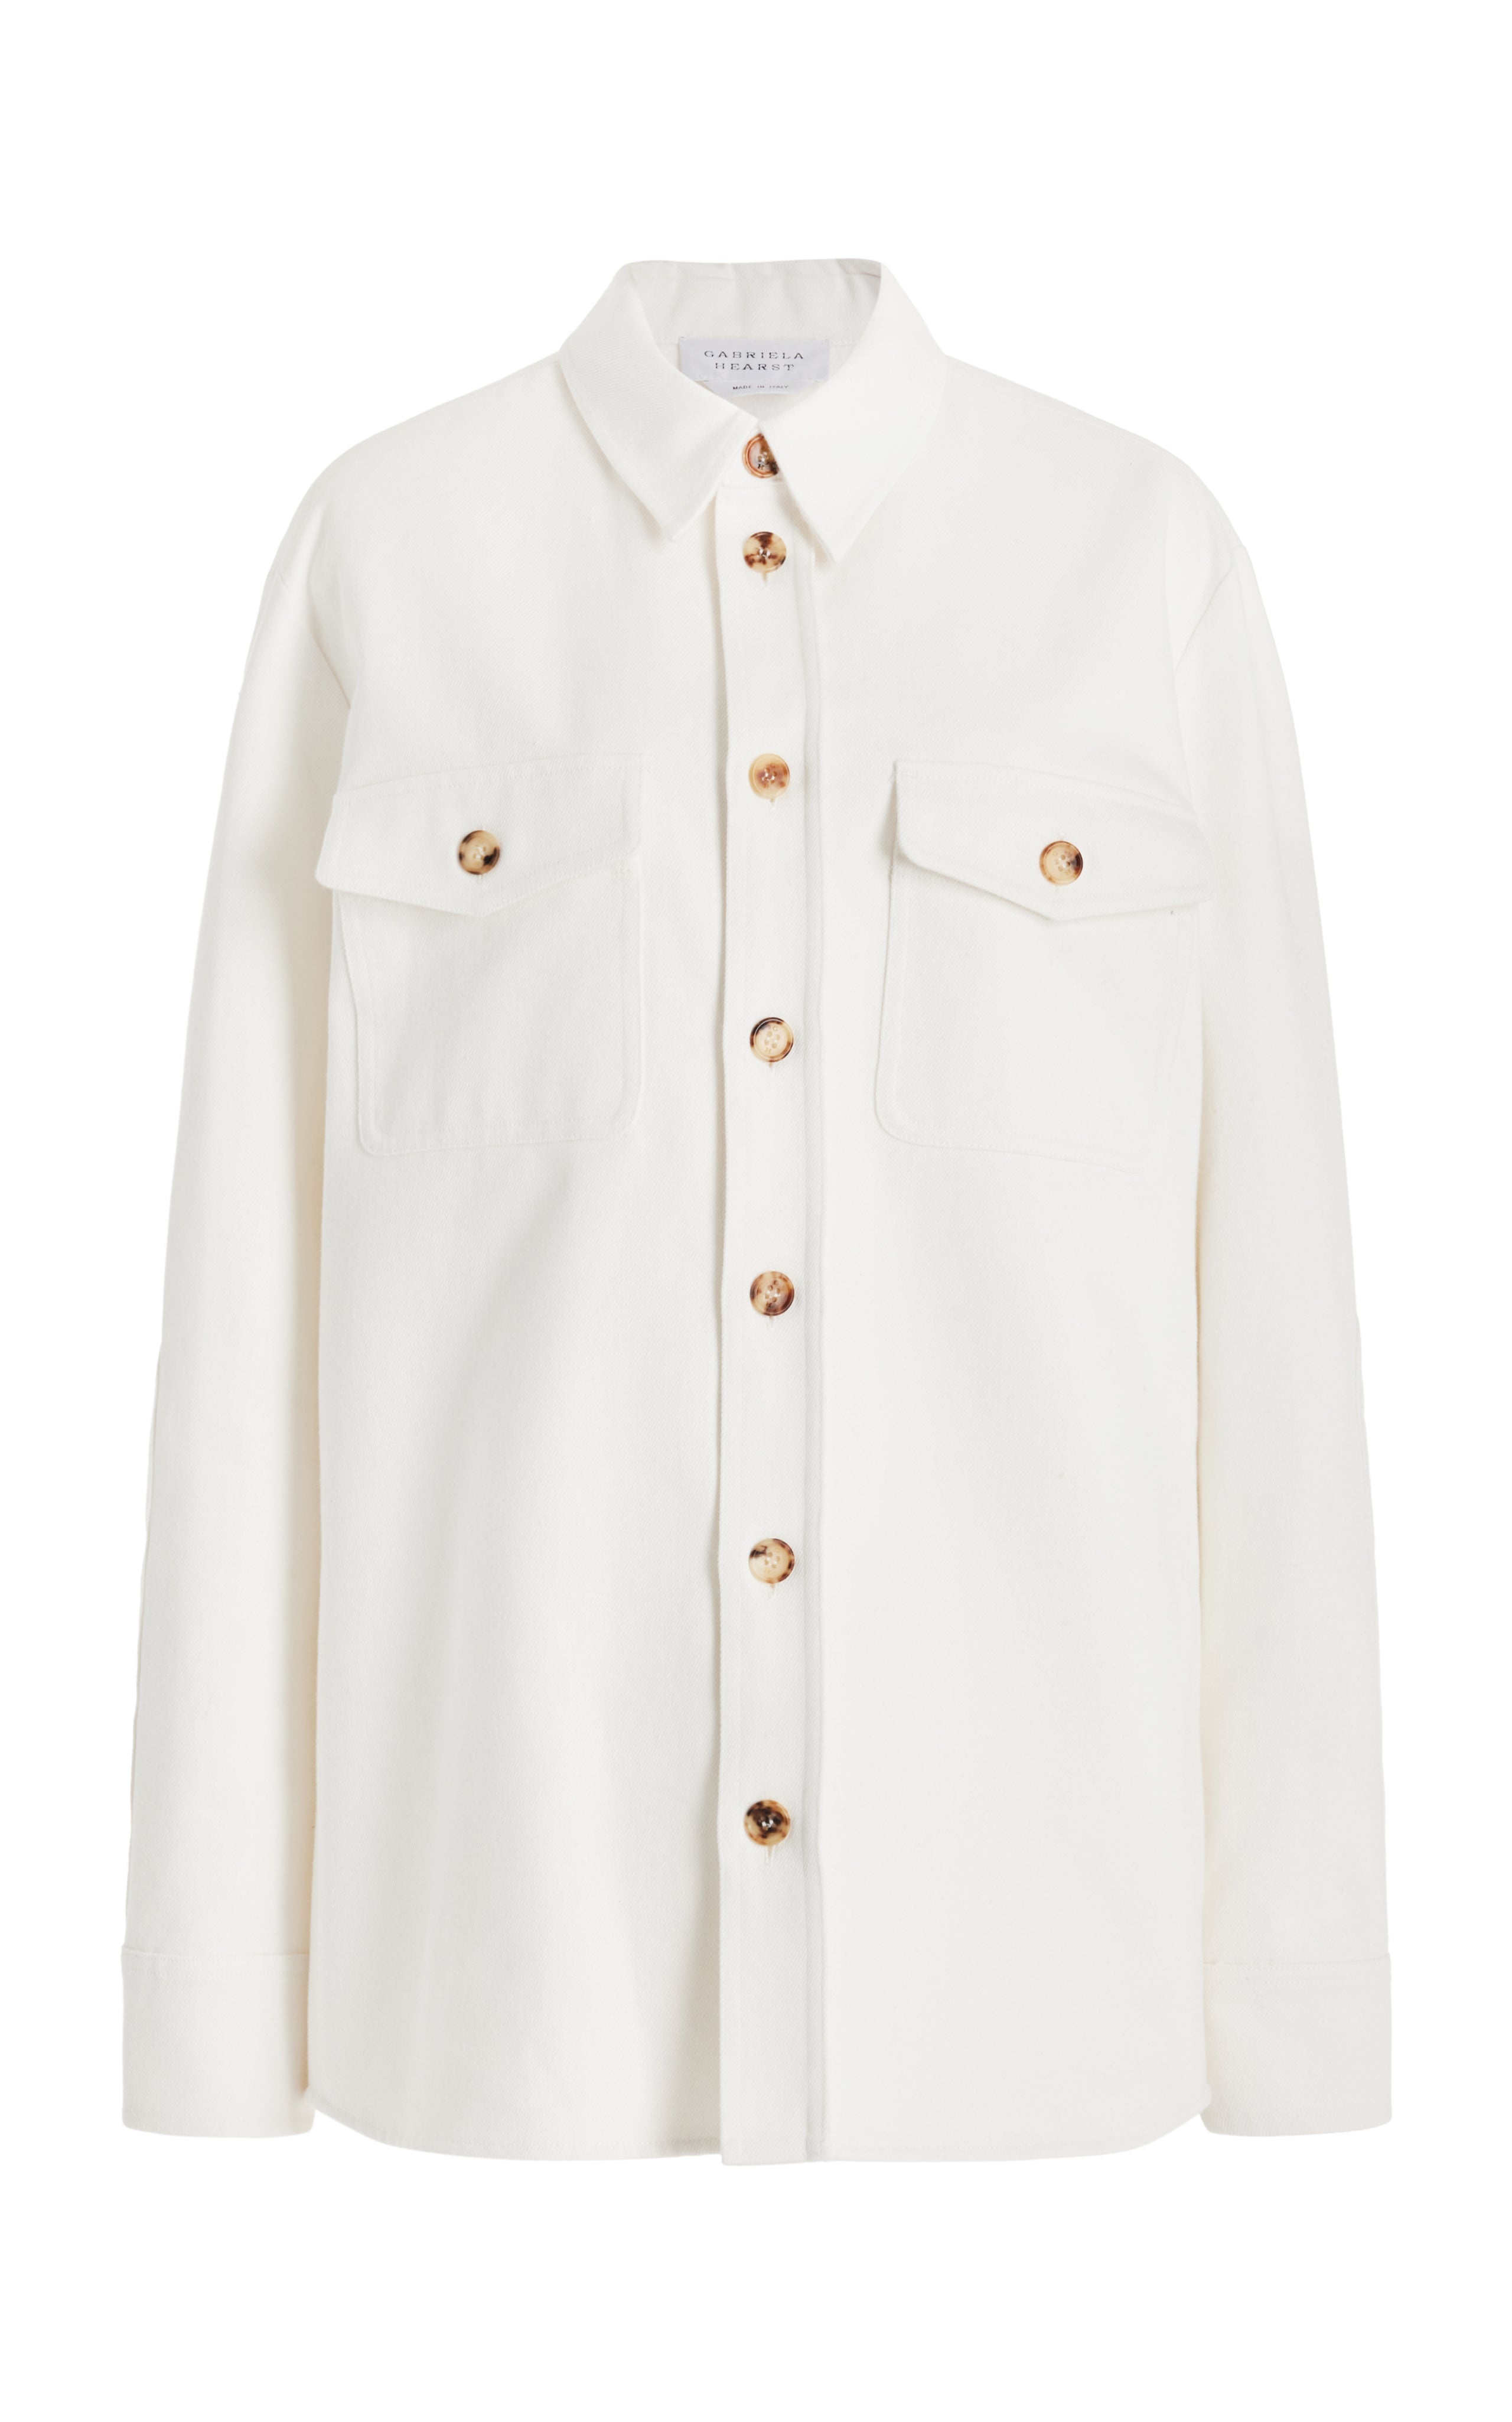 Everly Overshirt in White Organic Cotton - 1